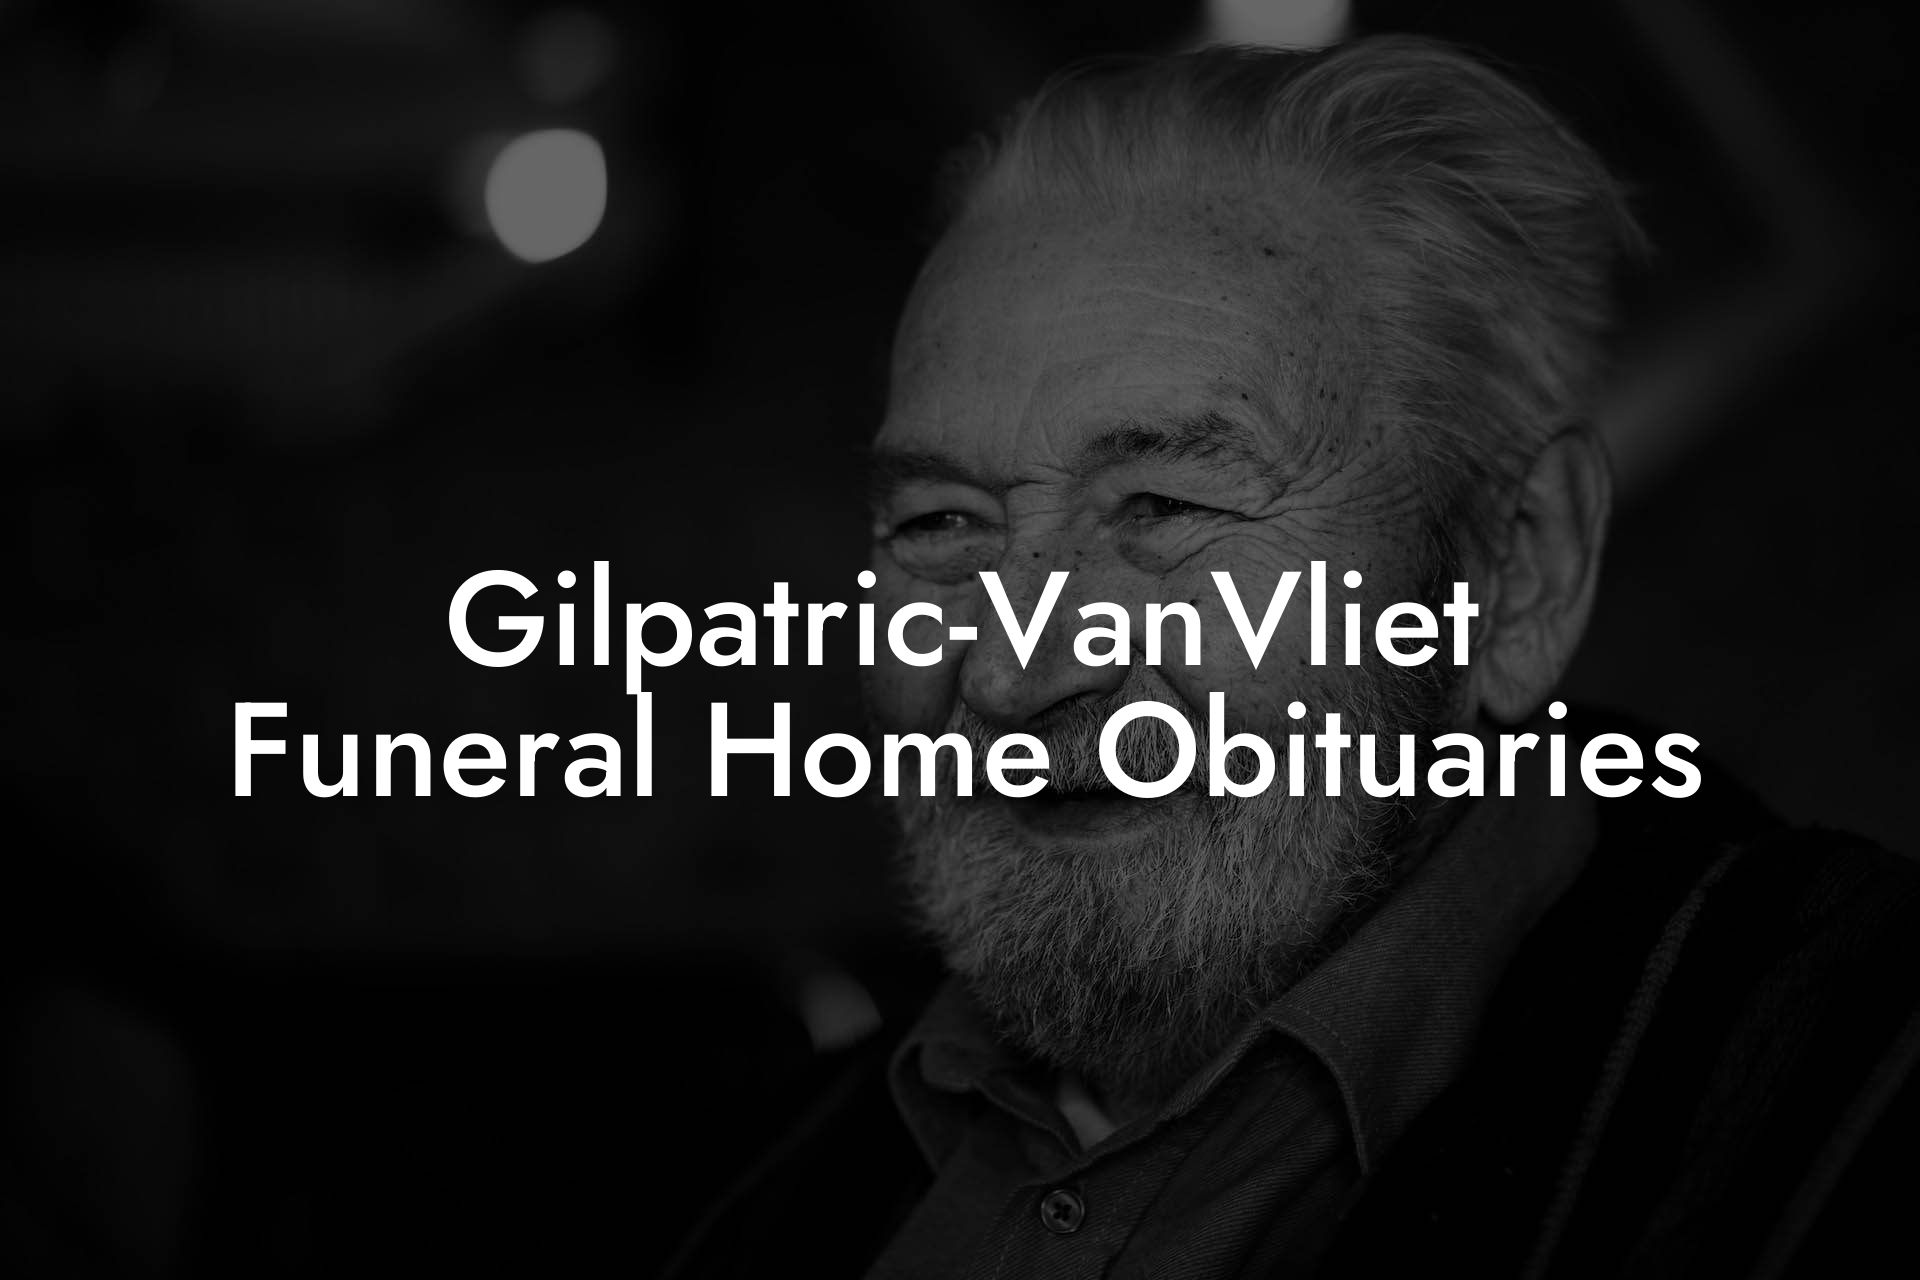 Gilpatric-VanVliet Funeral Home Obituaries